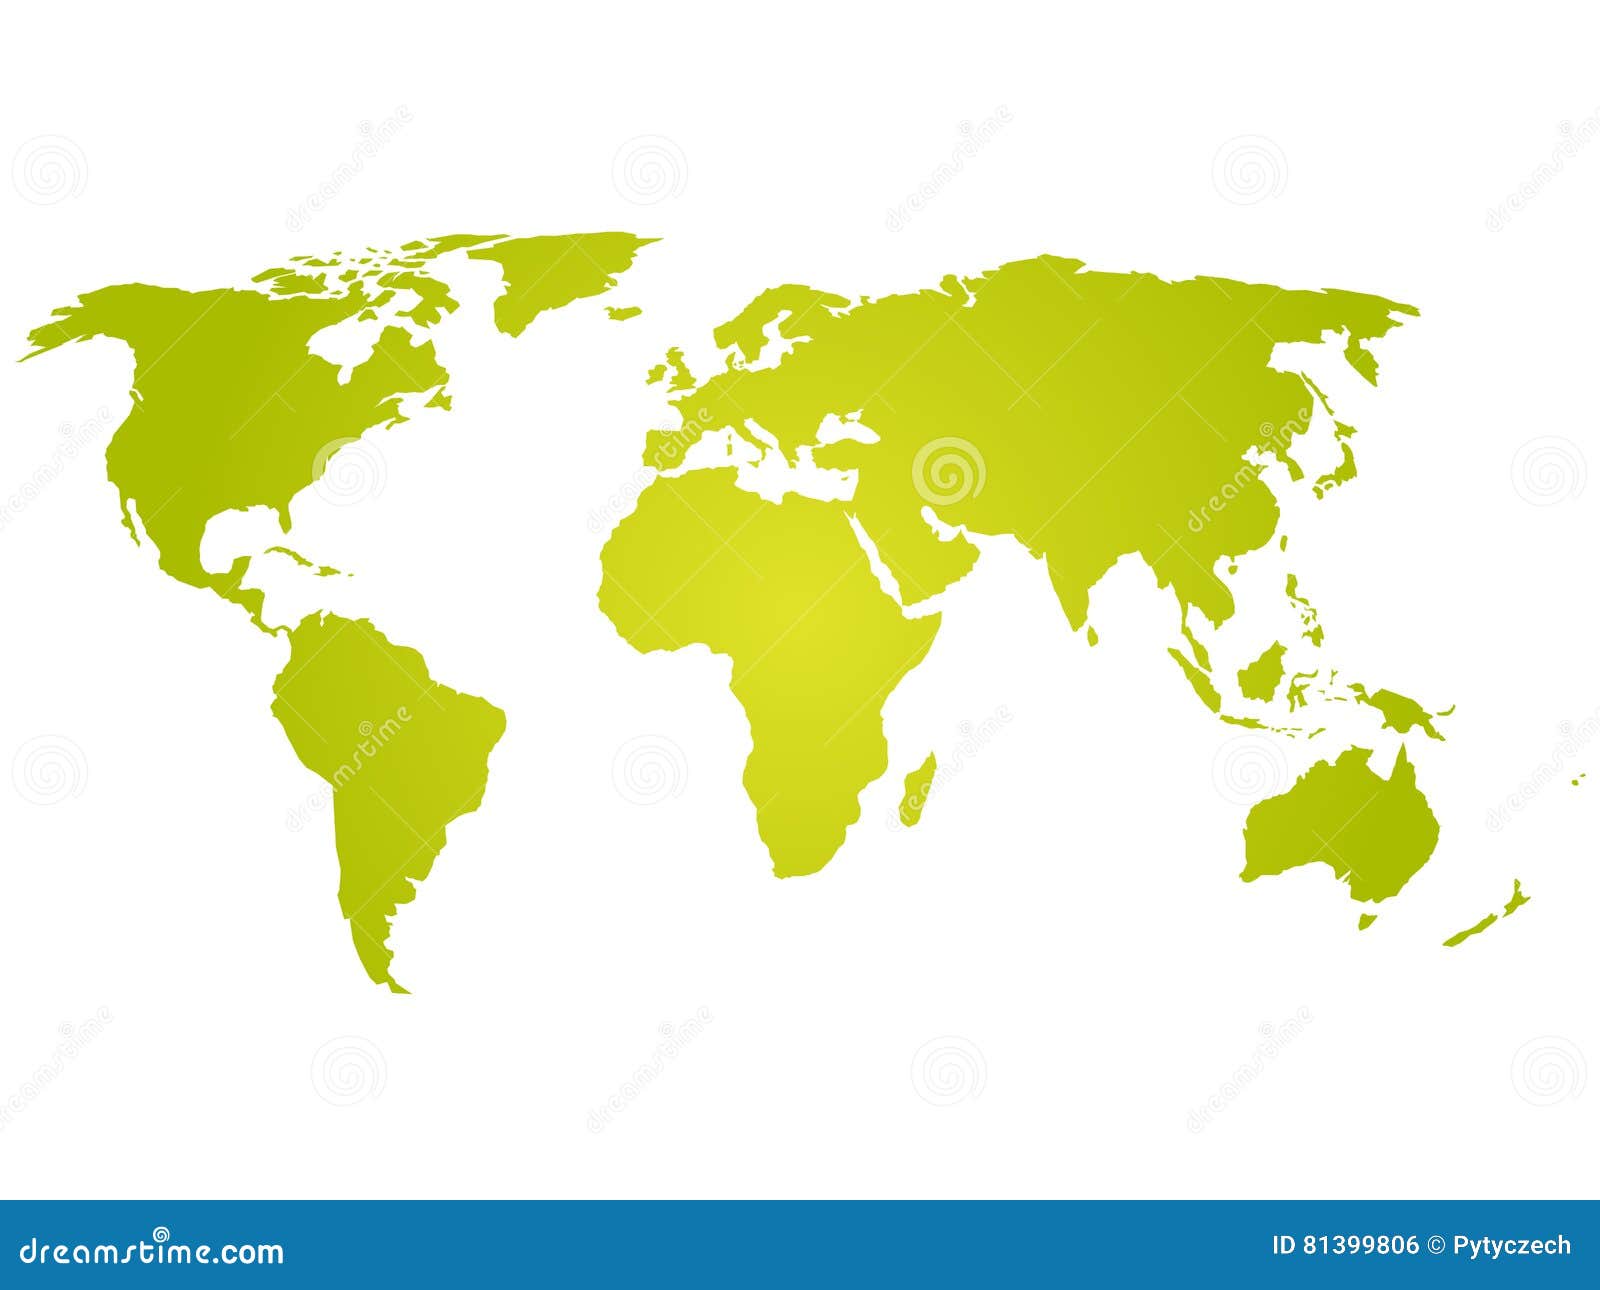 More world types. Зеленая карта земли.